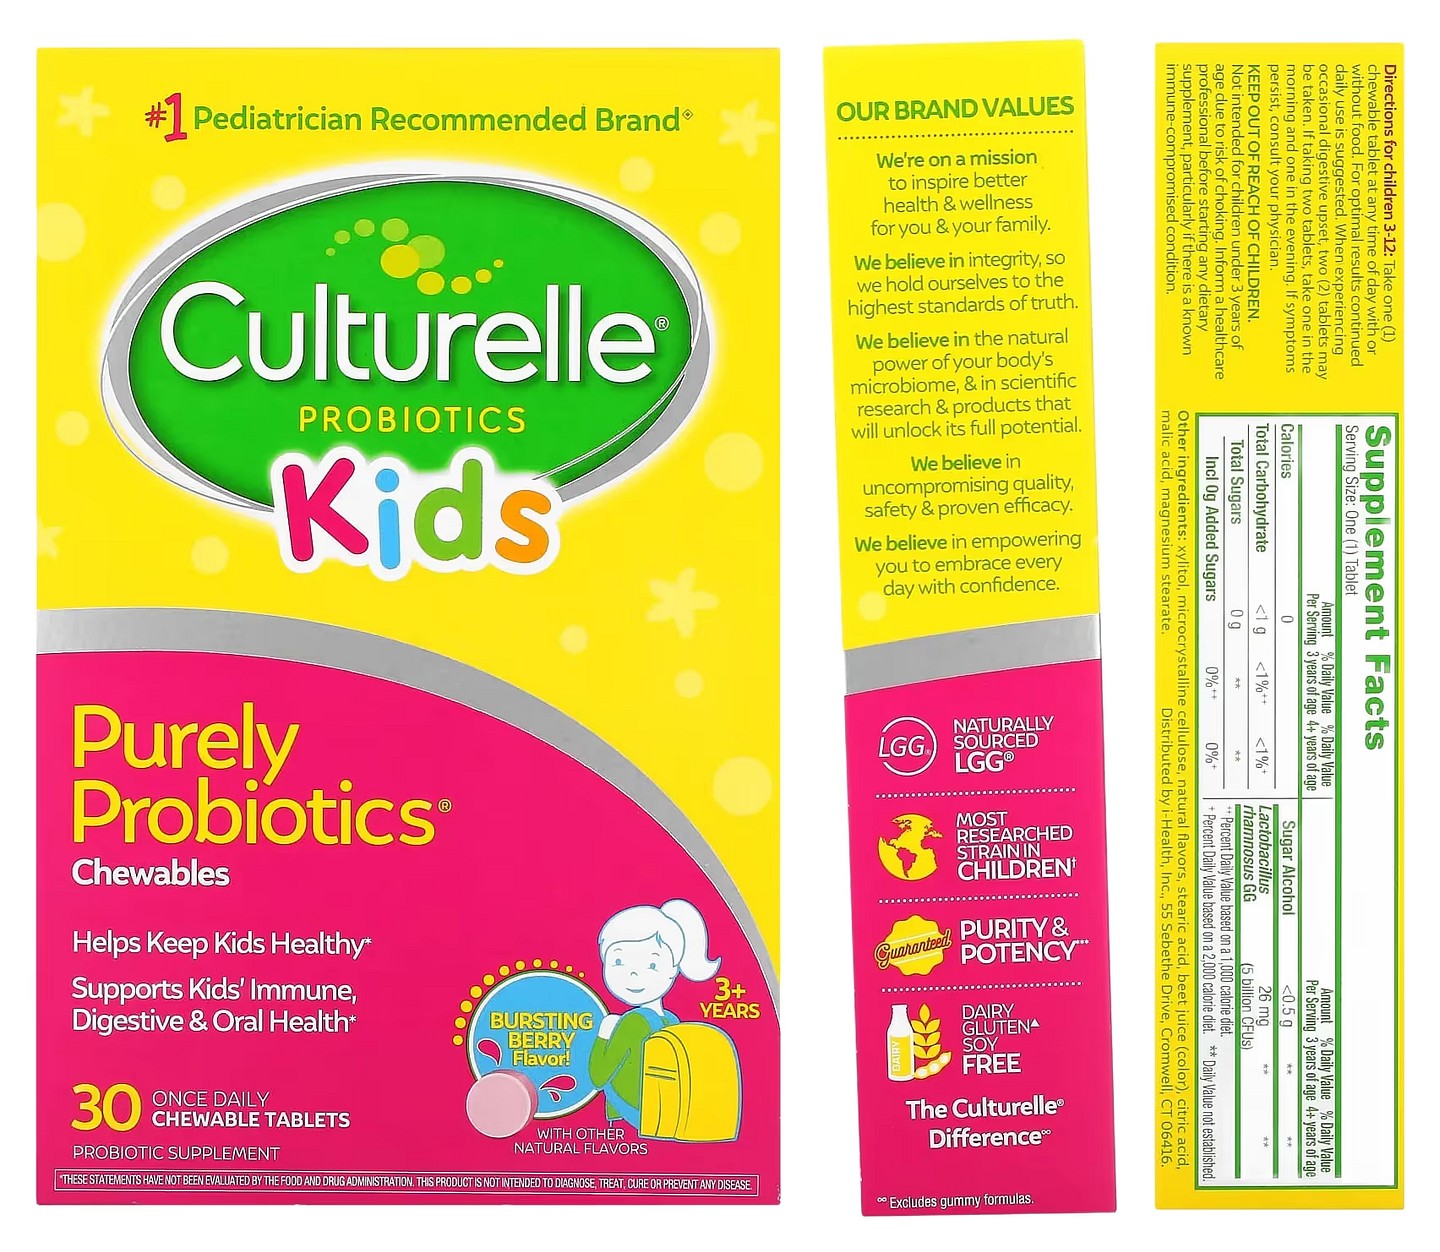 Culturelle, Kids packaging